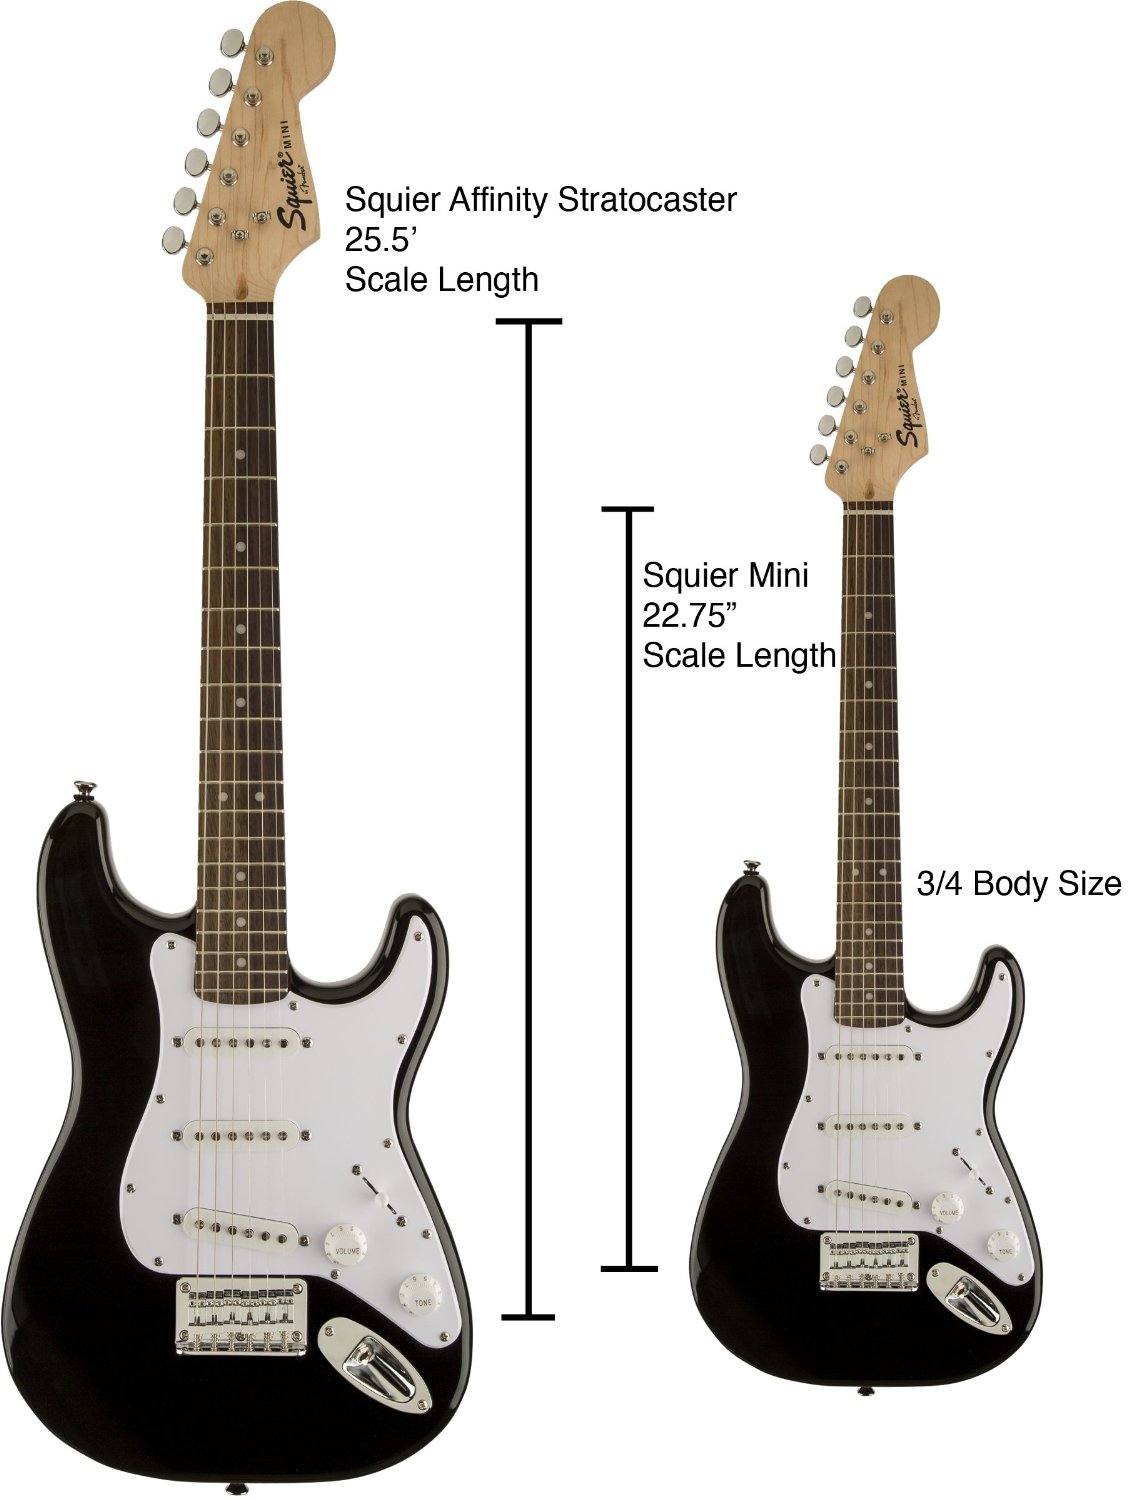 Характеристики электрогитары. Размер гитары Fender Squier Stratocaster. Фендер скваер стратокастер мини. Fender Stratocaster габариты. Гитара Squier Stratocaster габариты.